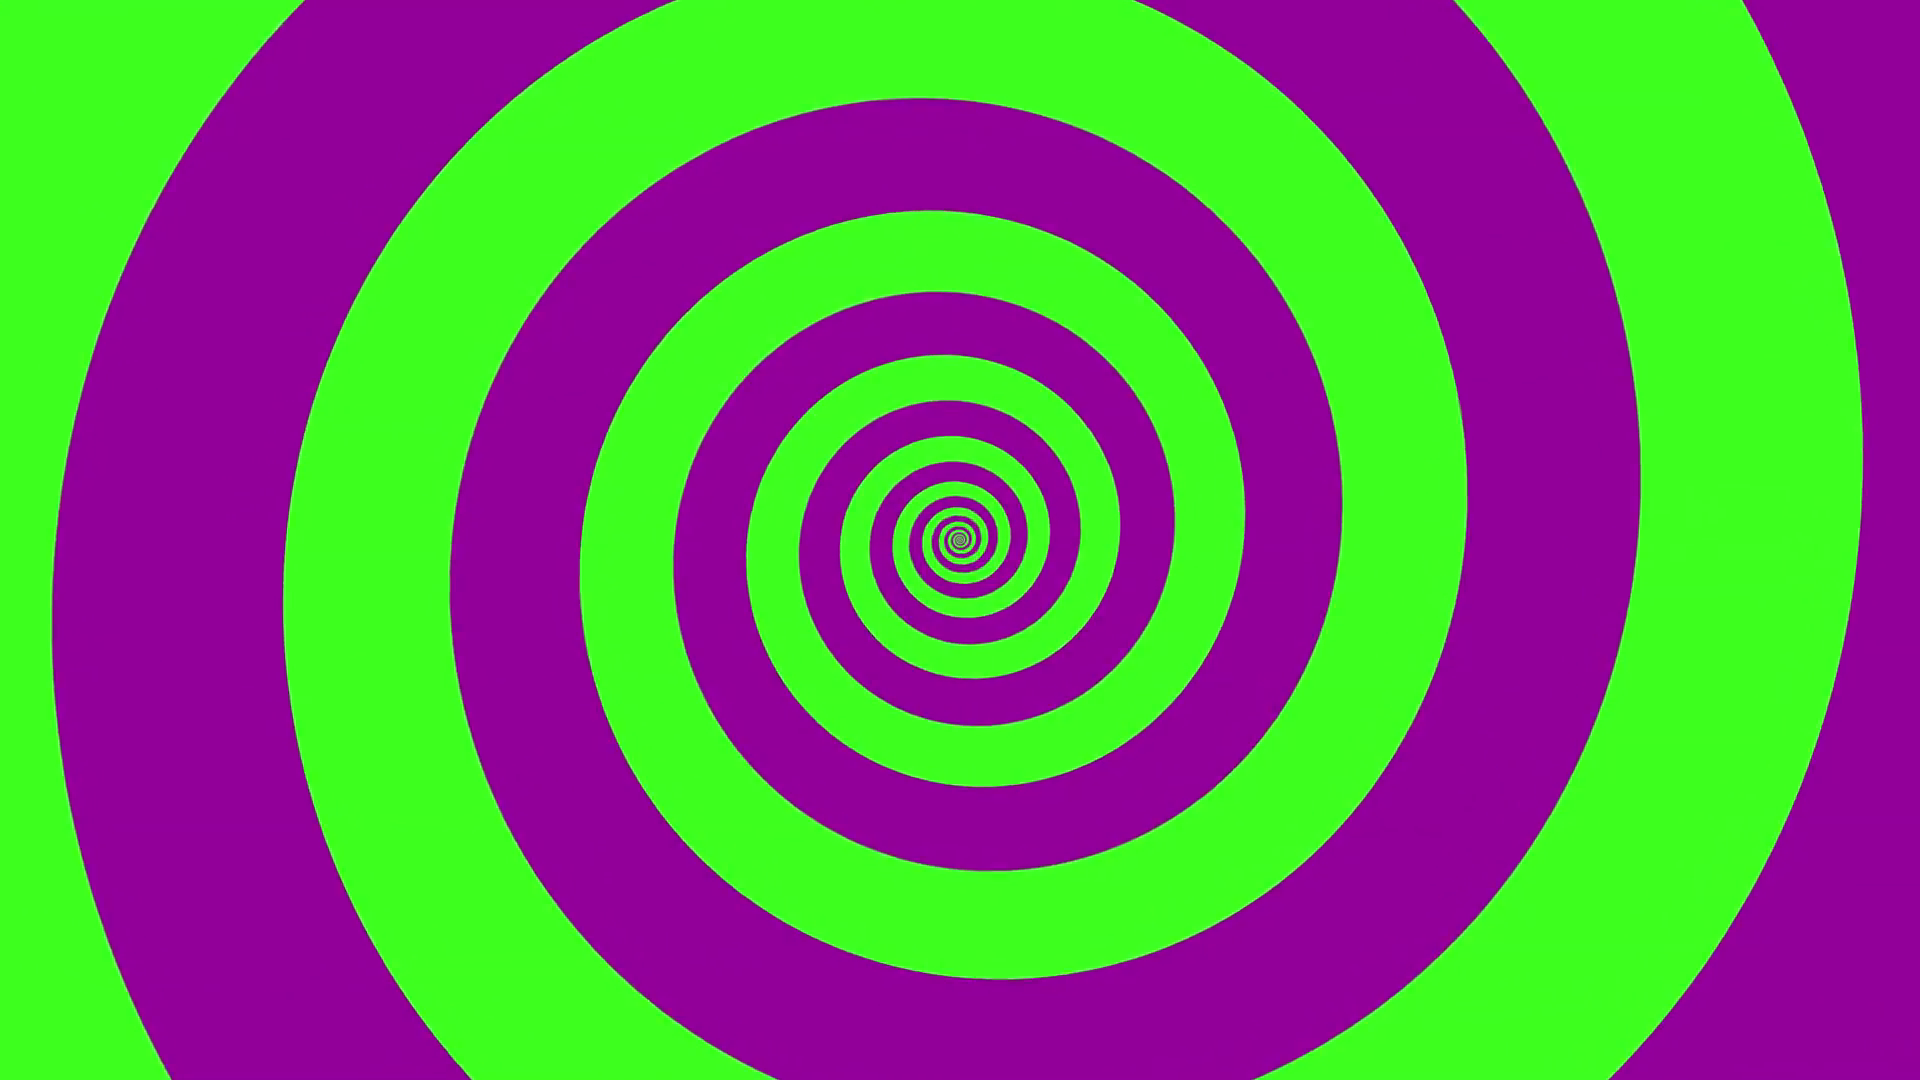 Green & Black spiral Optical illusion illustration, abstract ...